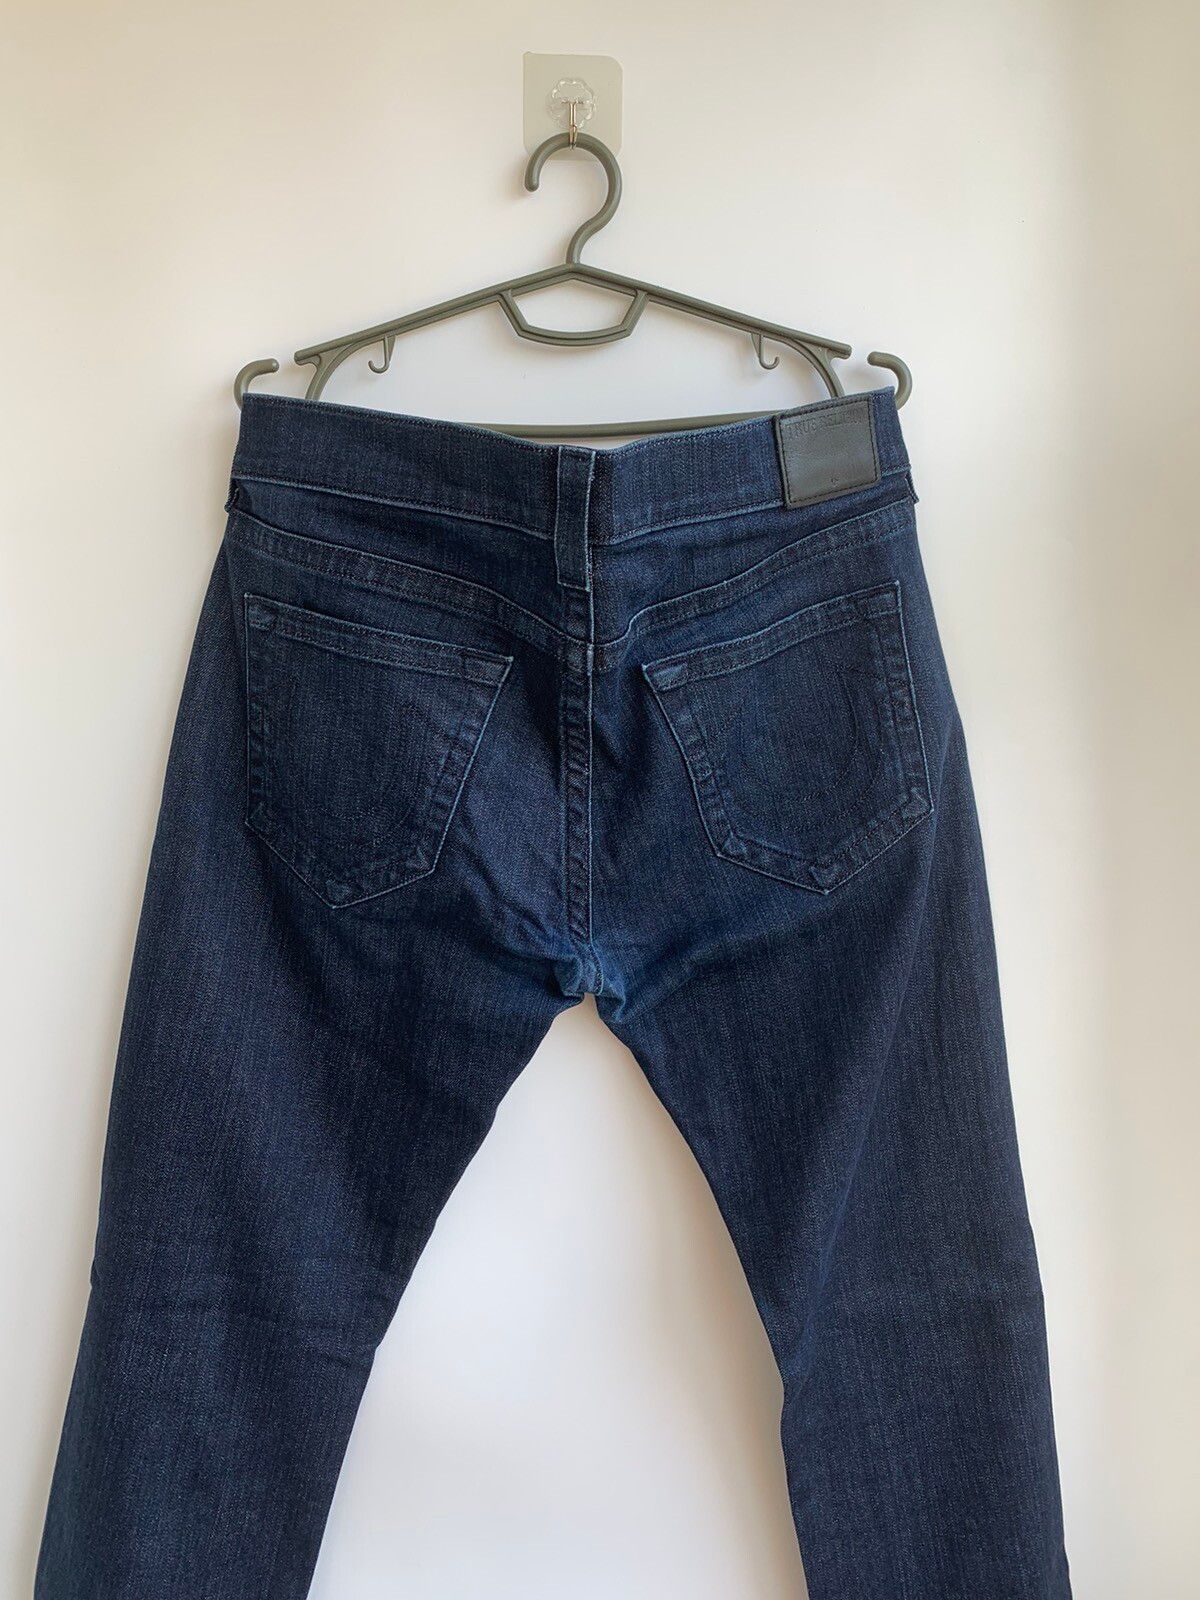 True Religion Vintage True Religion Rocco jeans with selvedge | Grailed